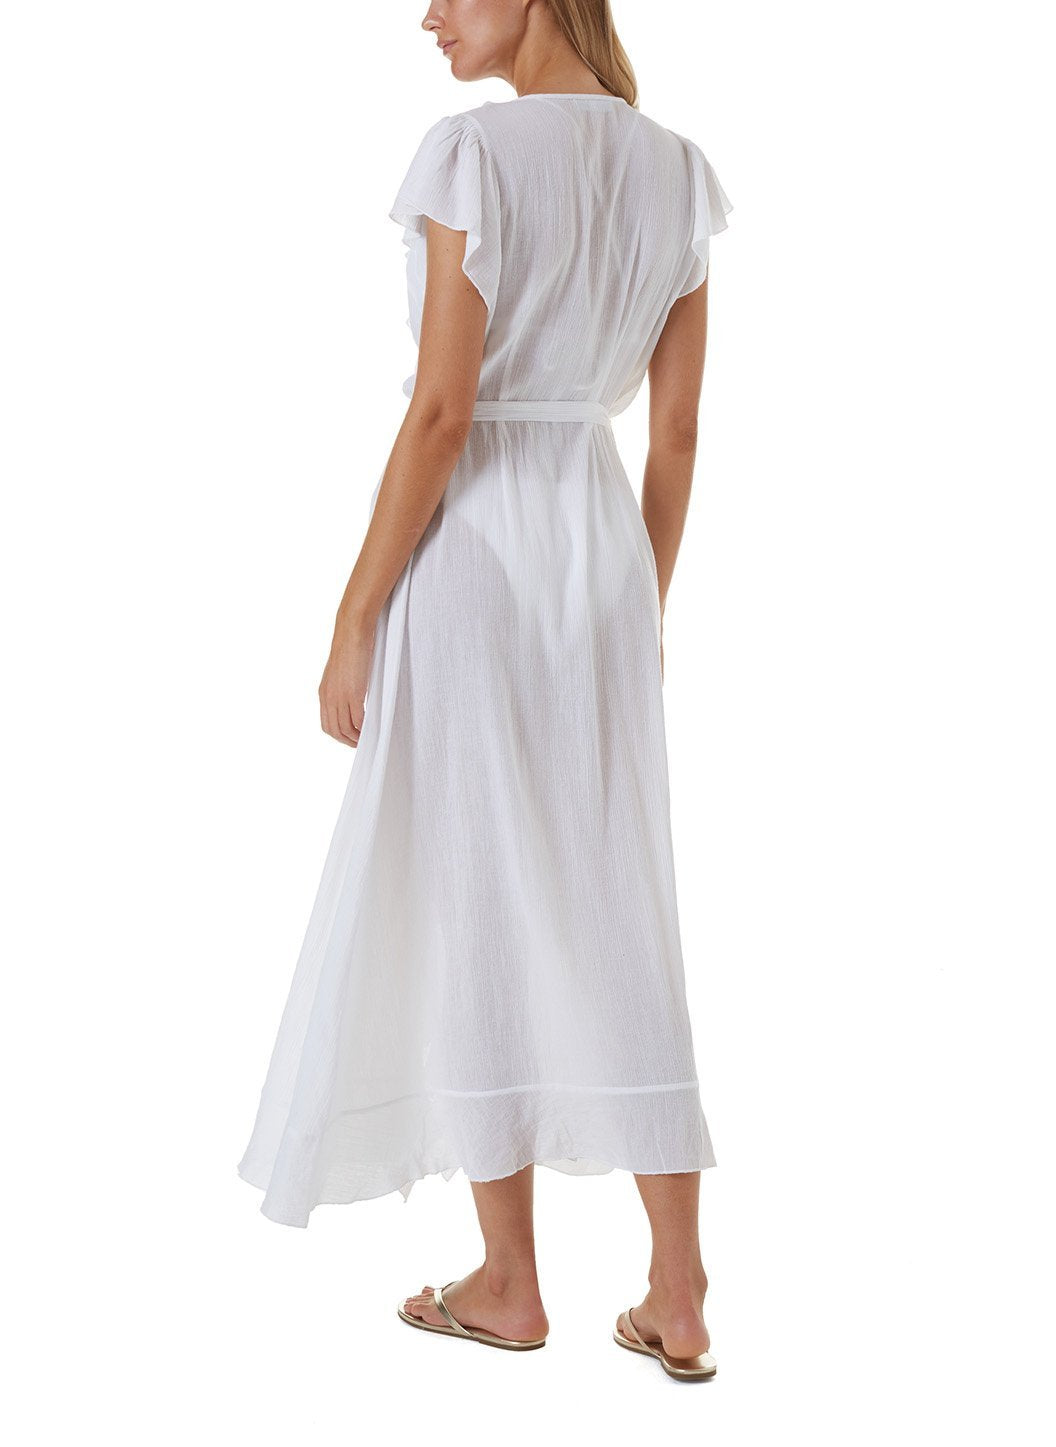 brianna white long dress 